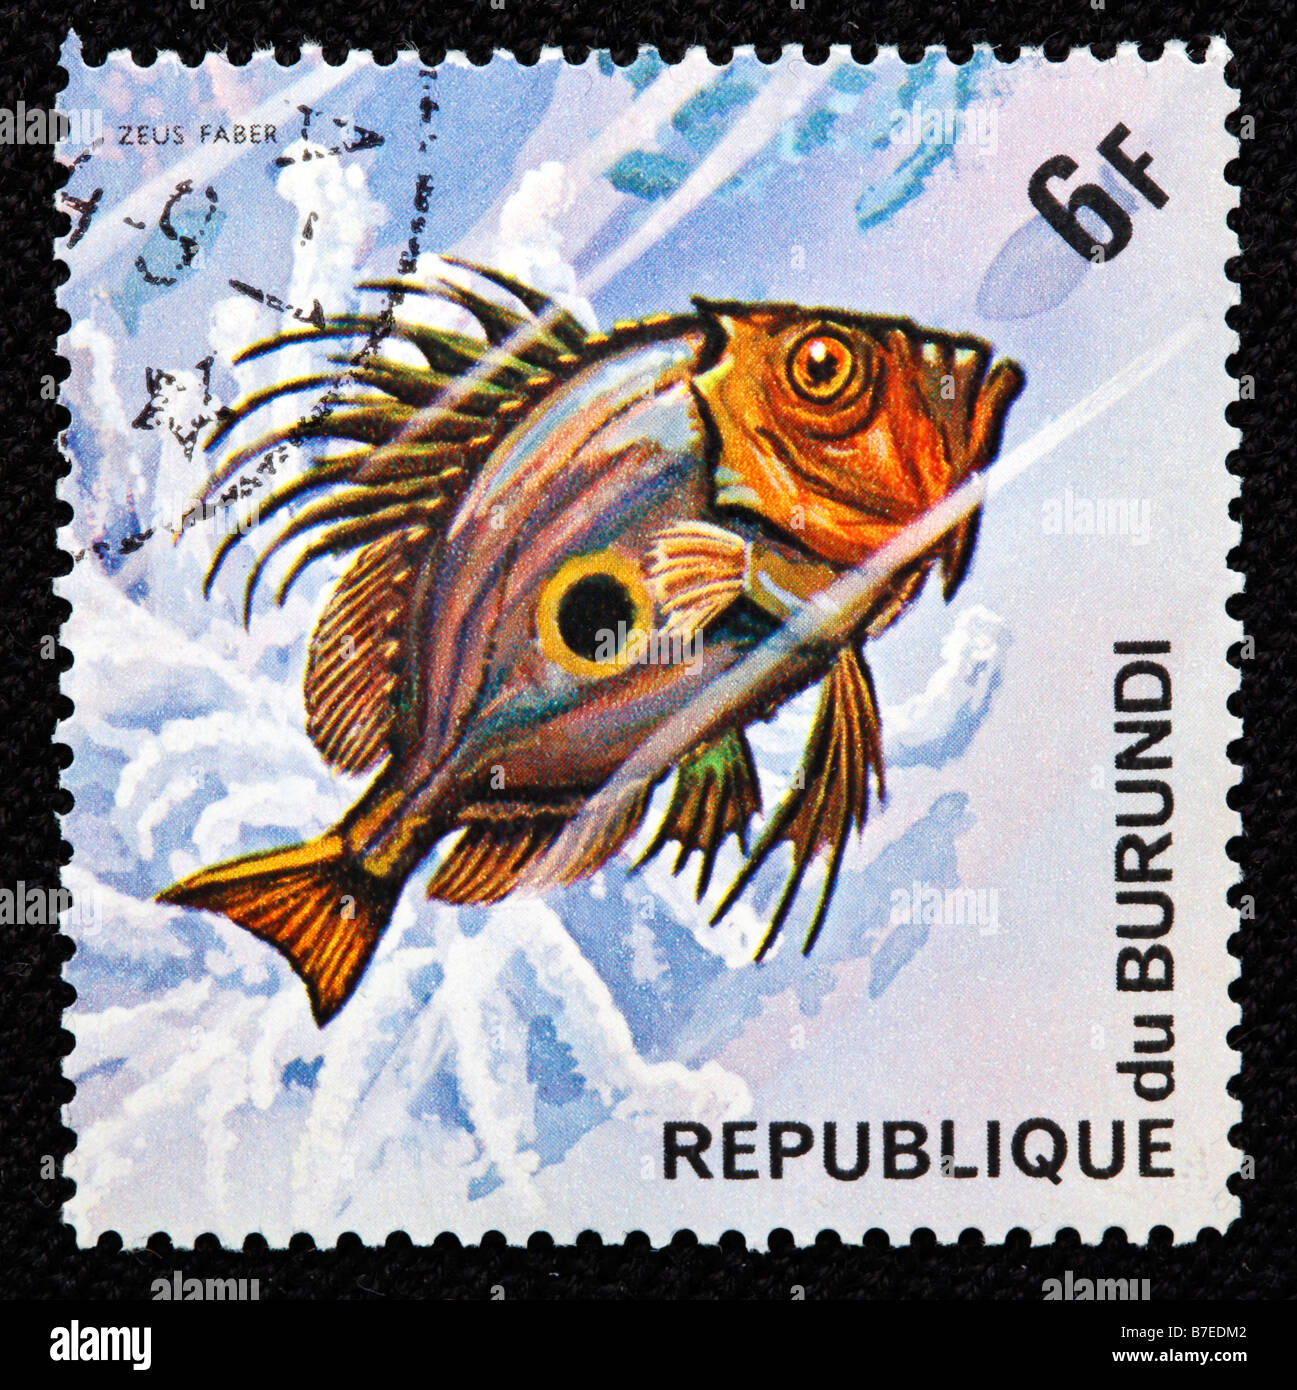 John Dory, Zeus faber, fish, postage stamp, Burundi, 1974 Stock Photo